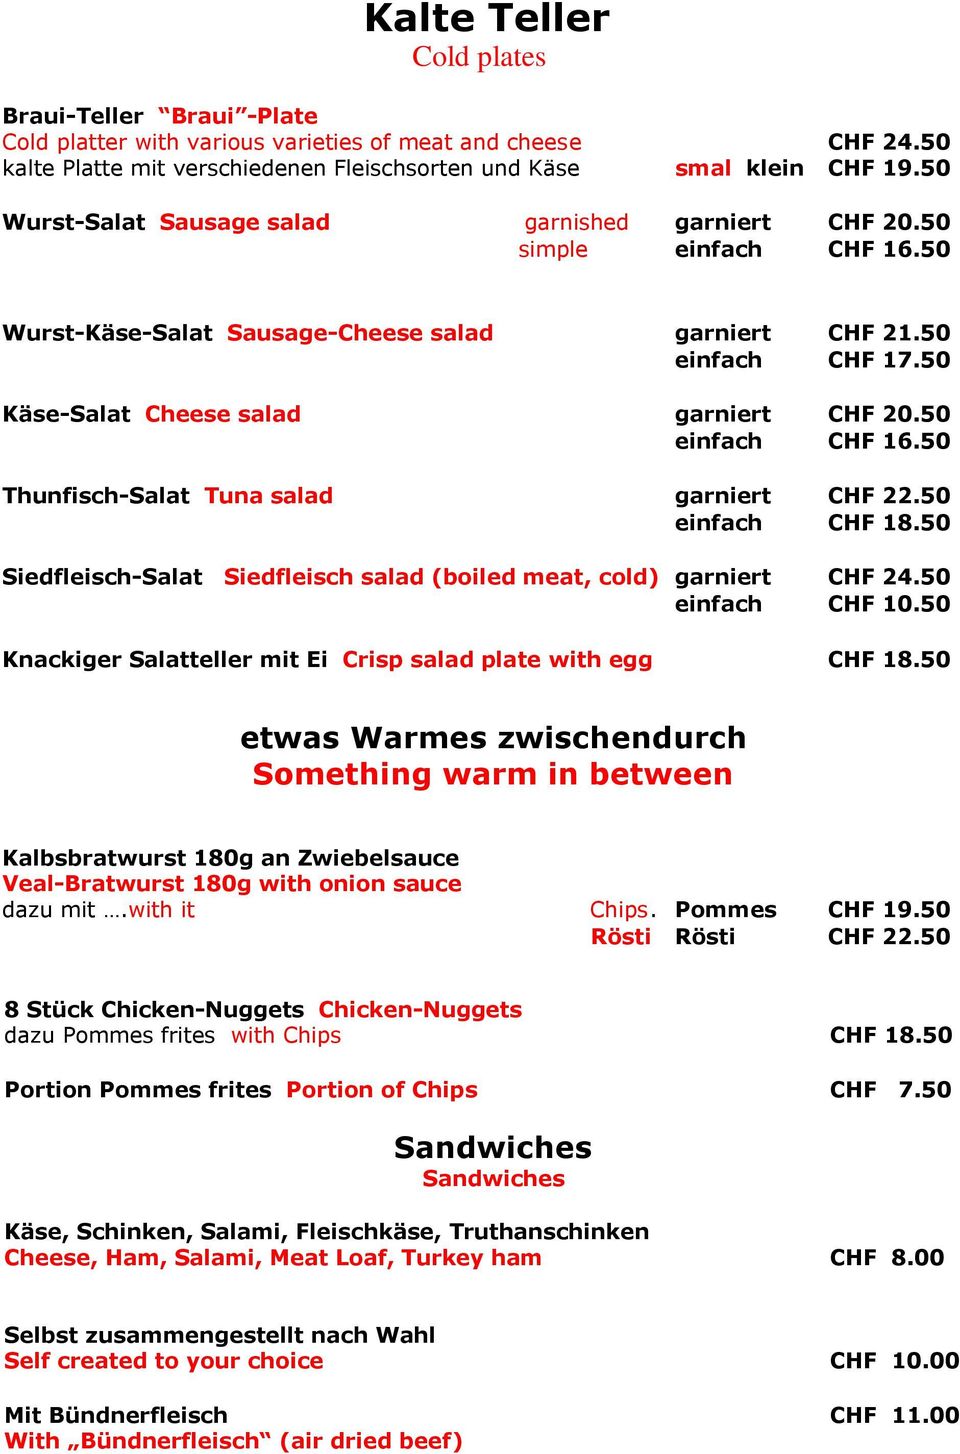 50 einfach CHF 16.50 Thunfisch-Salat Tuna salad garniert CHF 22.50 einfach CHF 18.50 Siedfleisch-Salat Siedfleisch salad (boiled meat, cold) garniert CHF 24.50 einfach CHF 10.